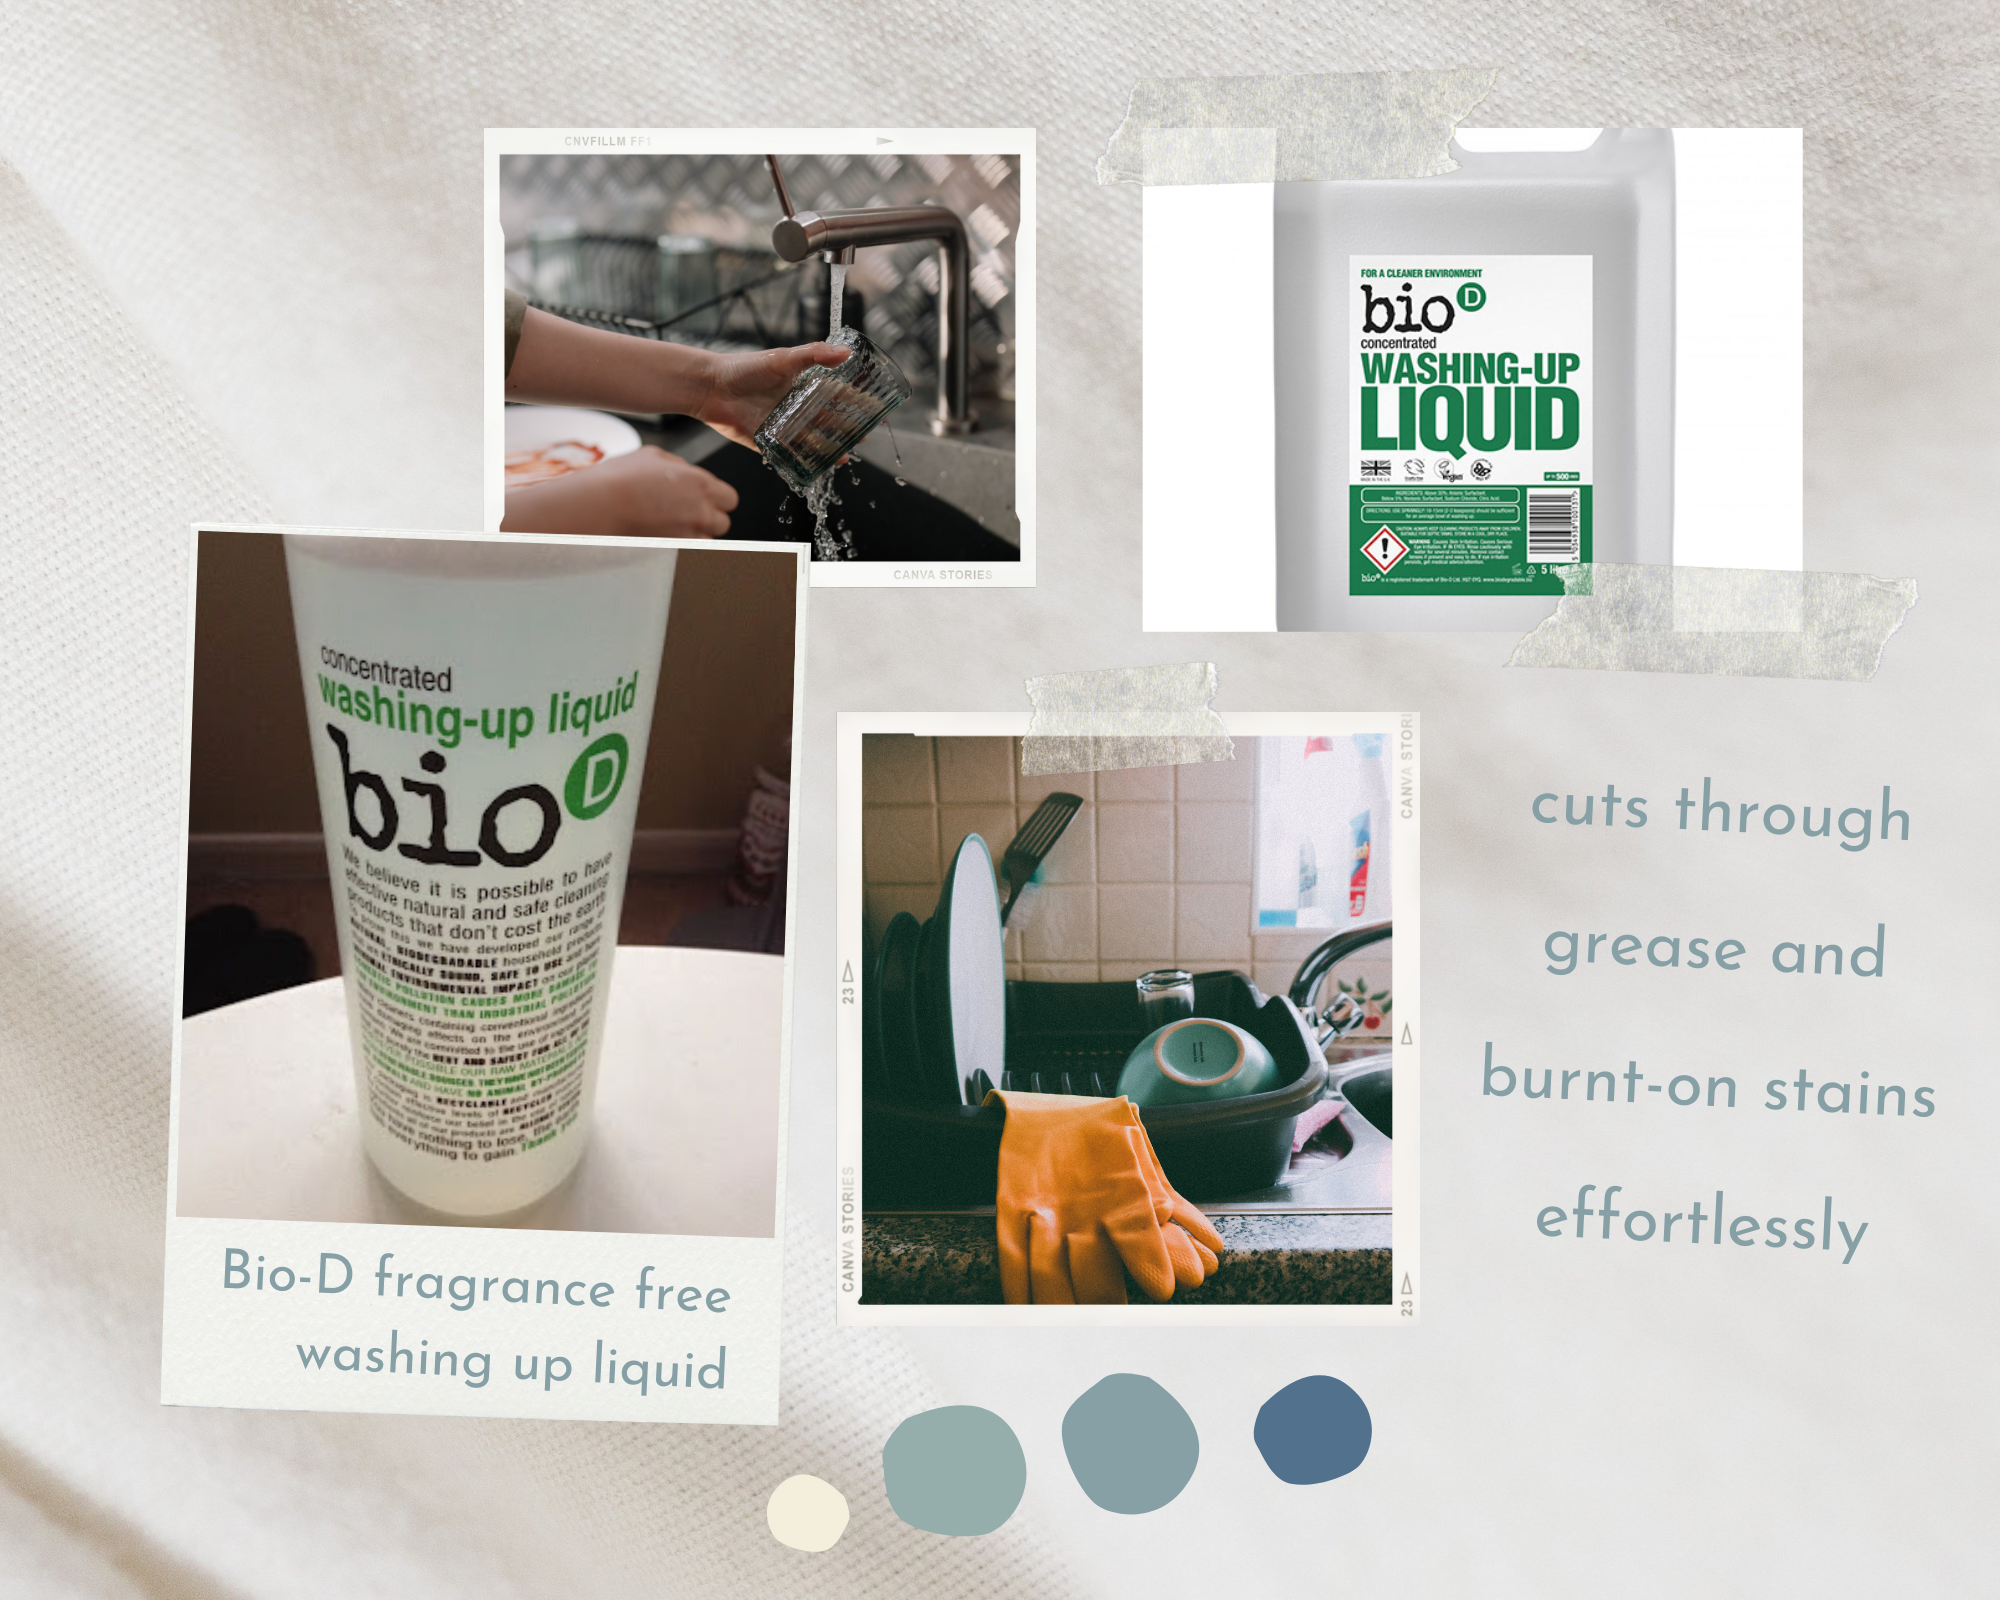 Bio-D fragrance free washing up liquid